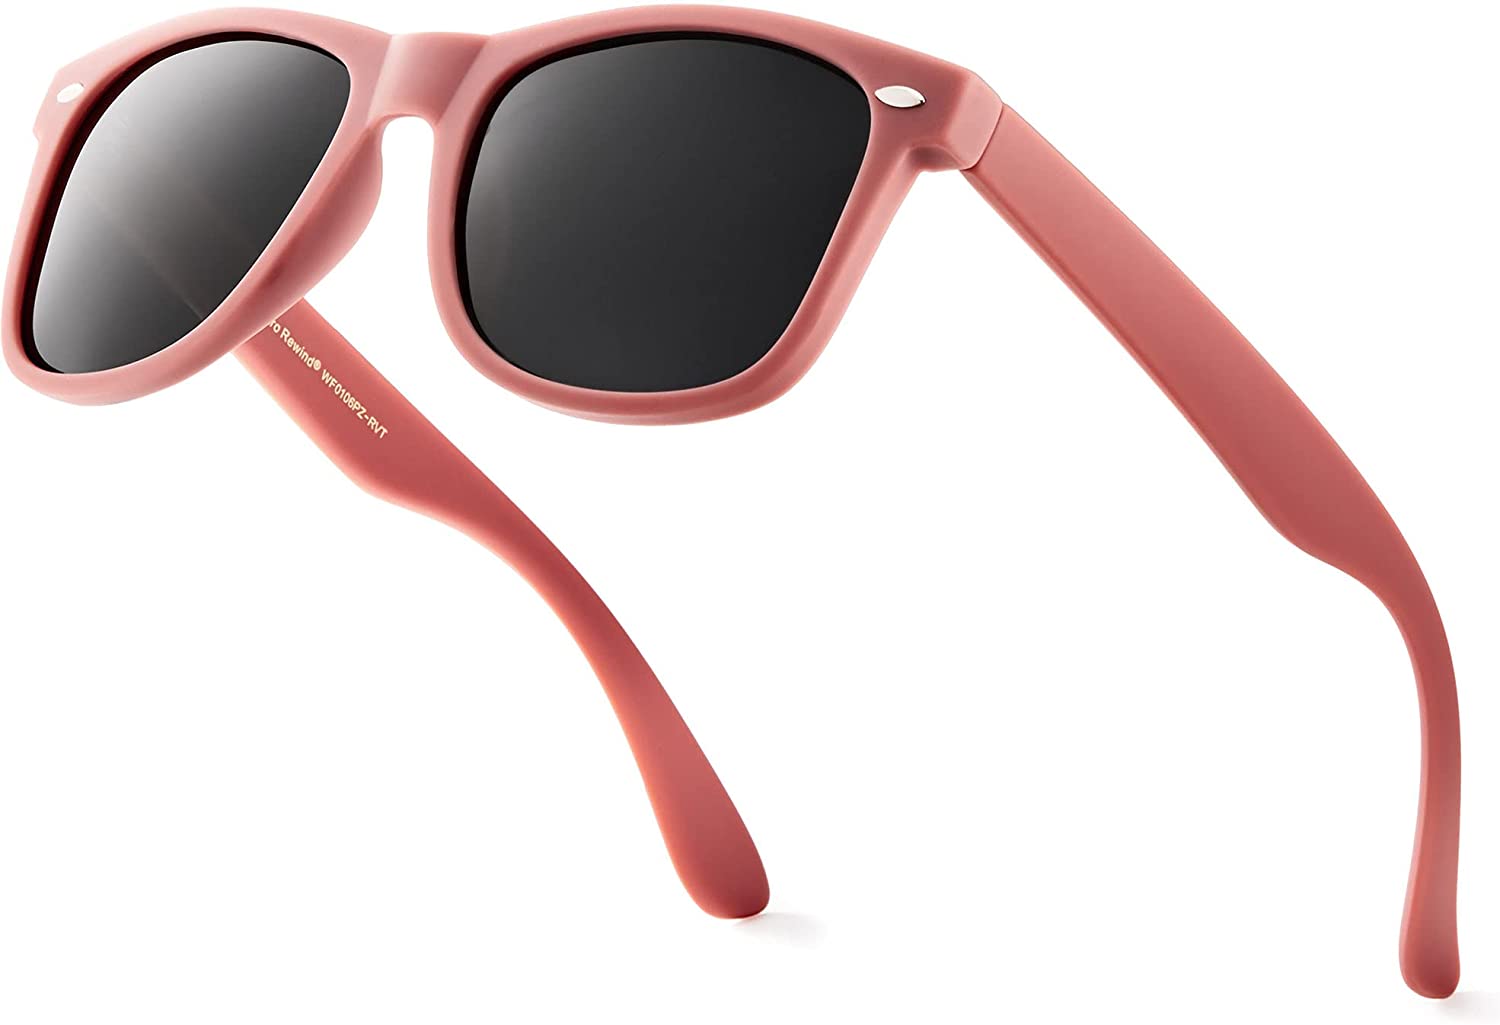 LV SUPREME glasses (2)_8  Polarized sunglasses, Rayban wayfarer